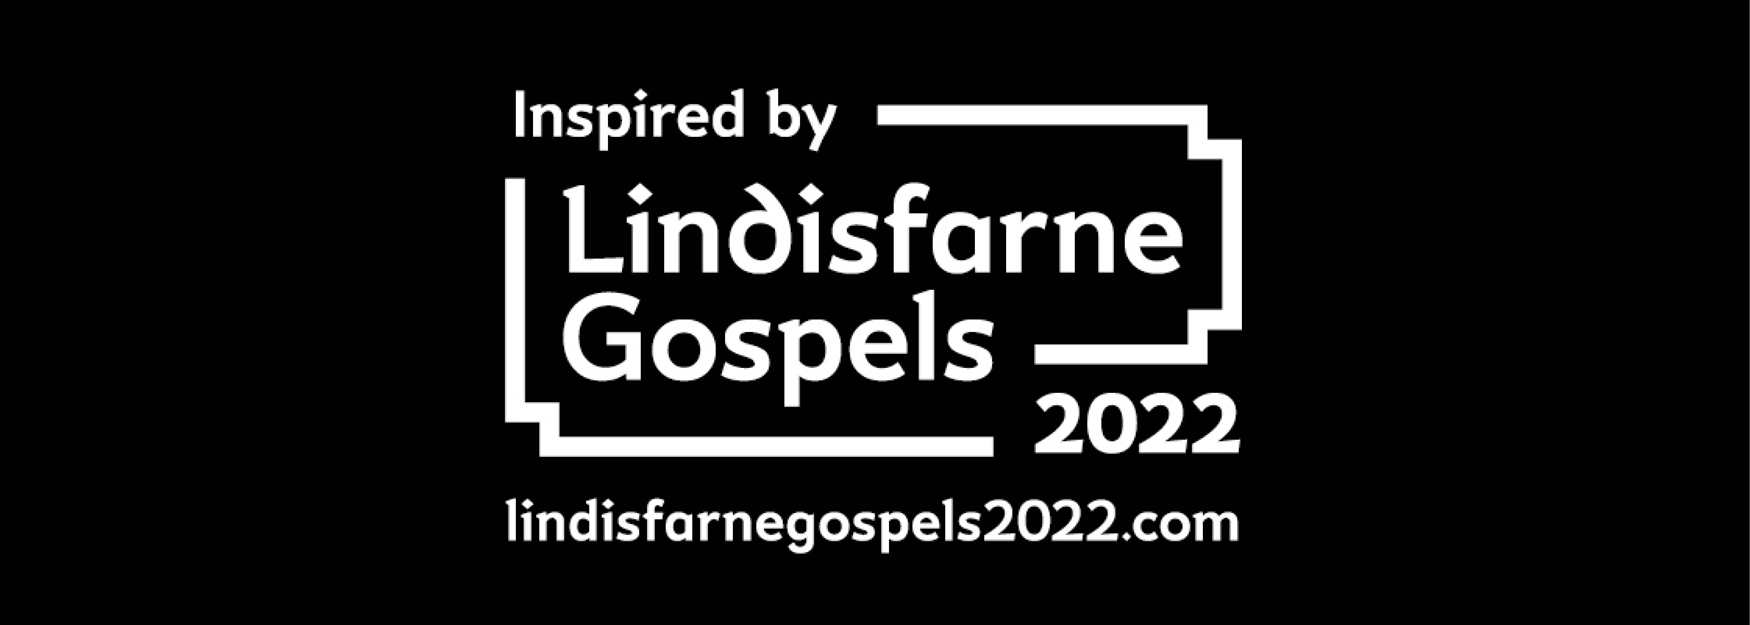 Lindisfarne Gospels inspired by logo